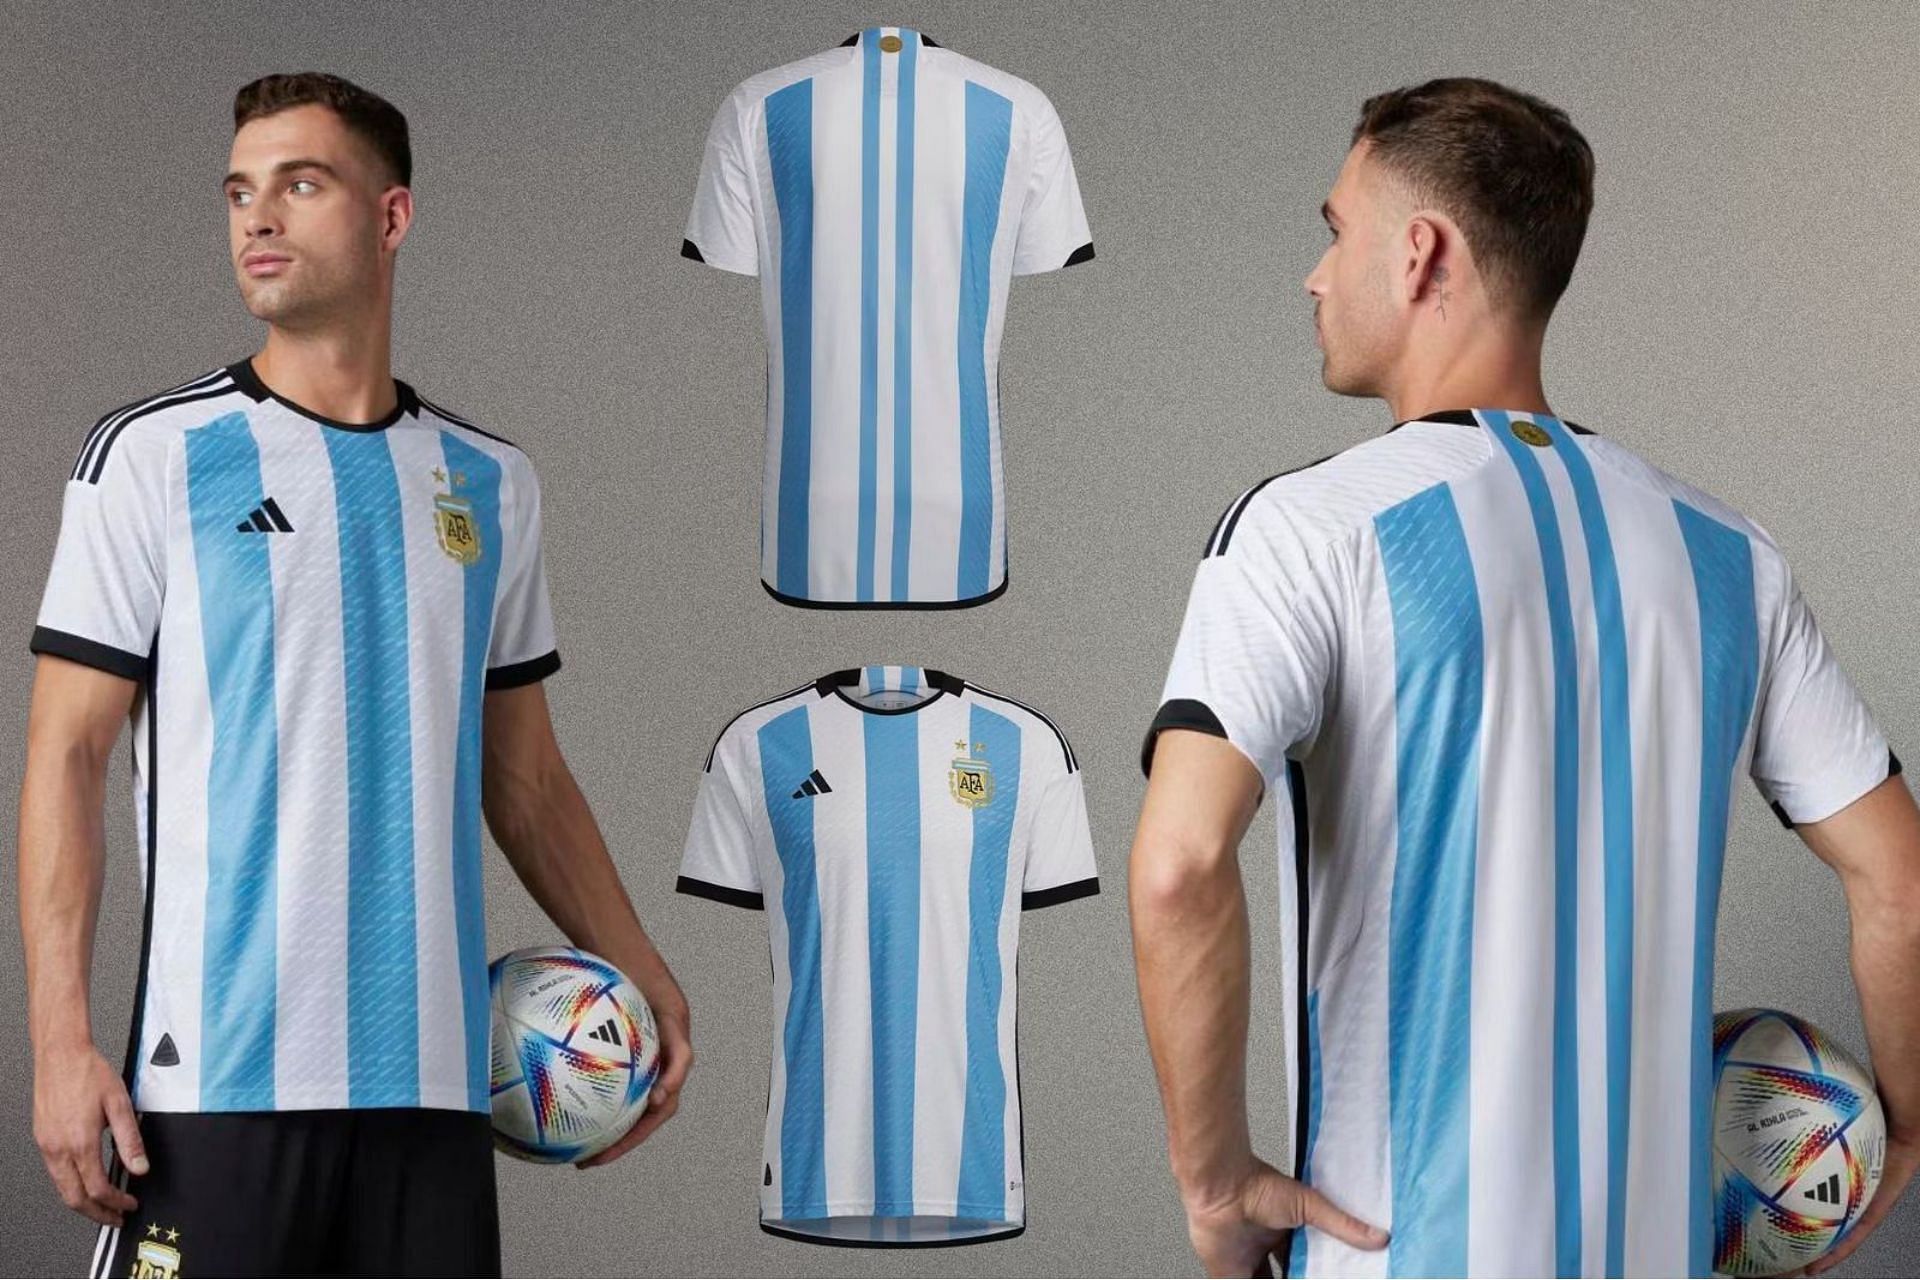 Argentina home jersey: Adidas x Argentina National football team